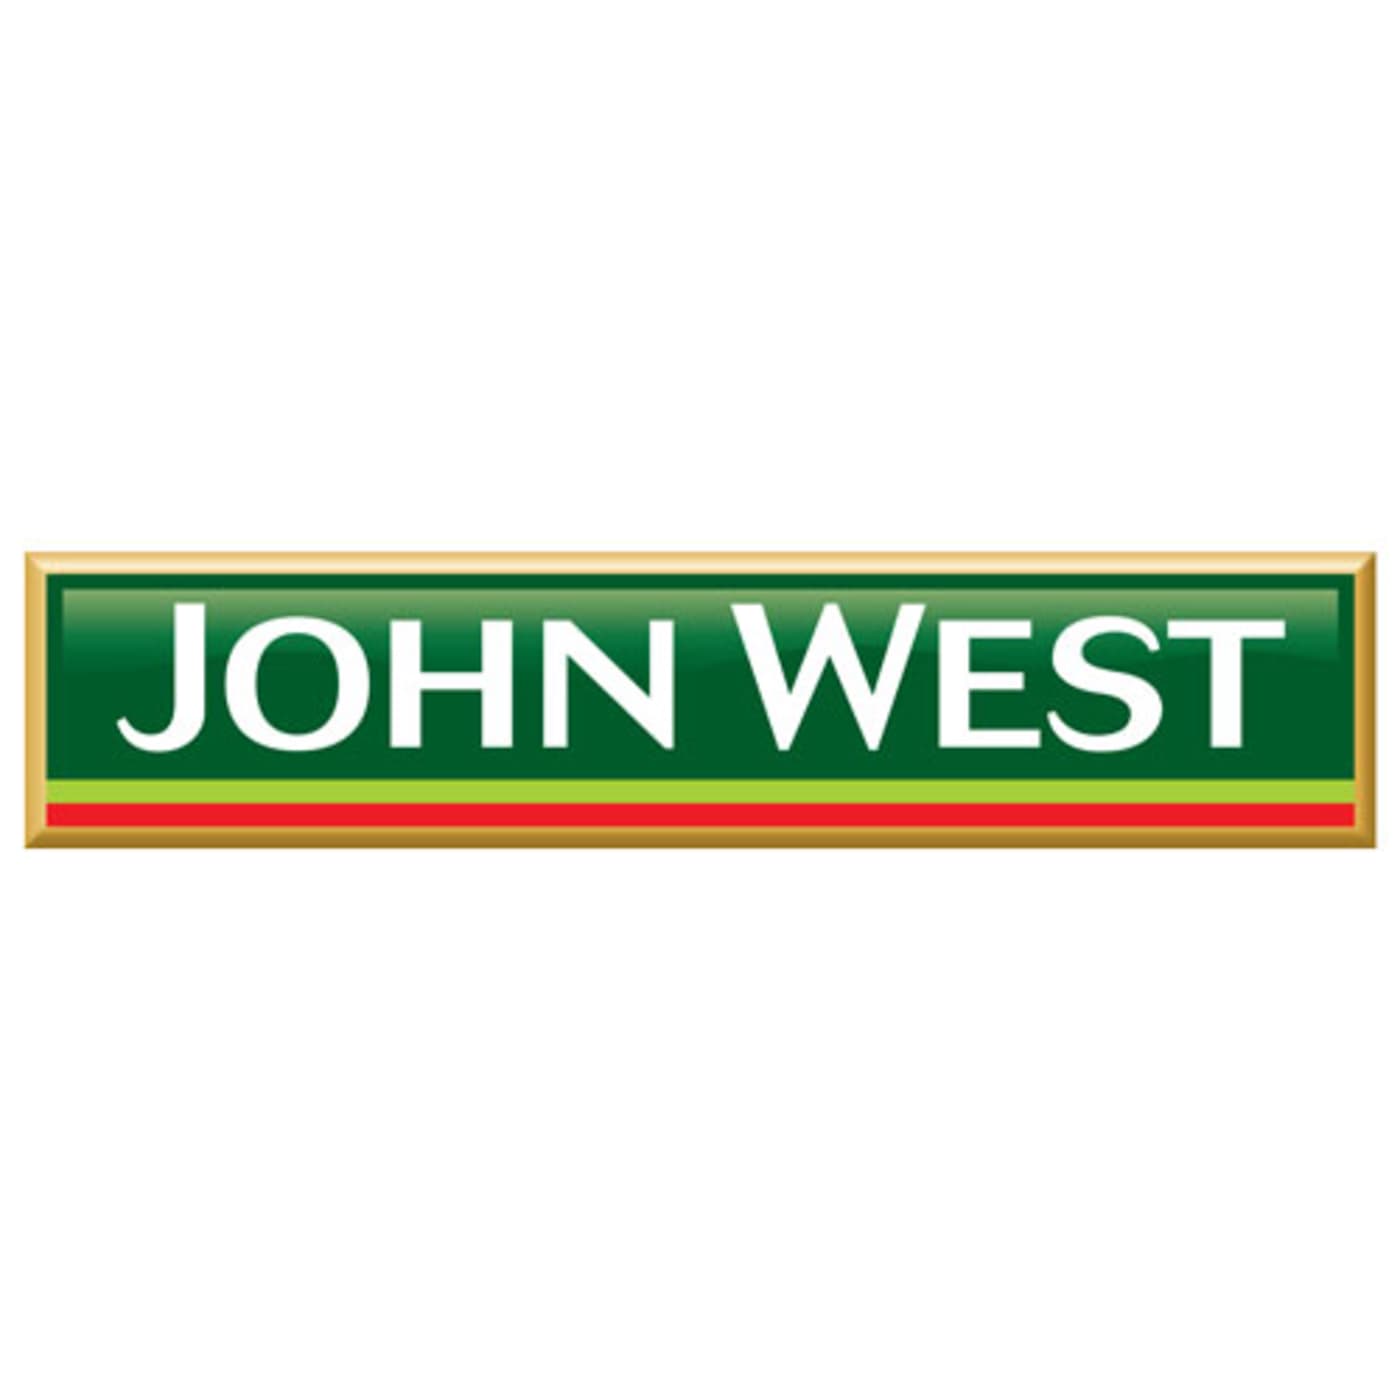 John West logo